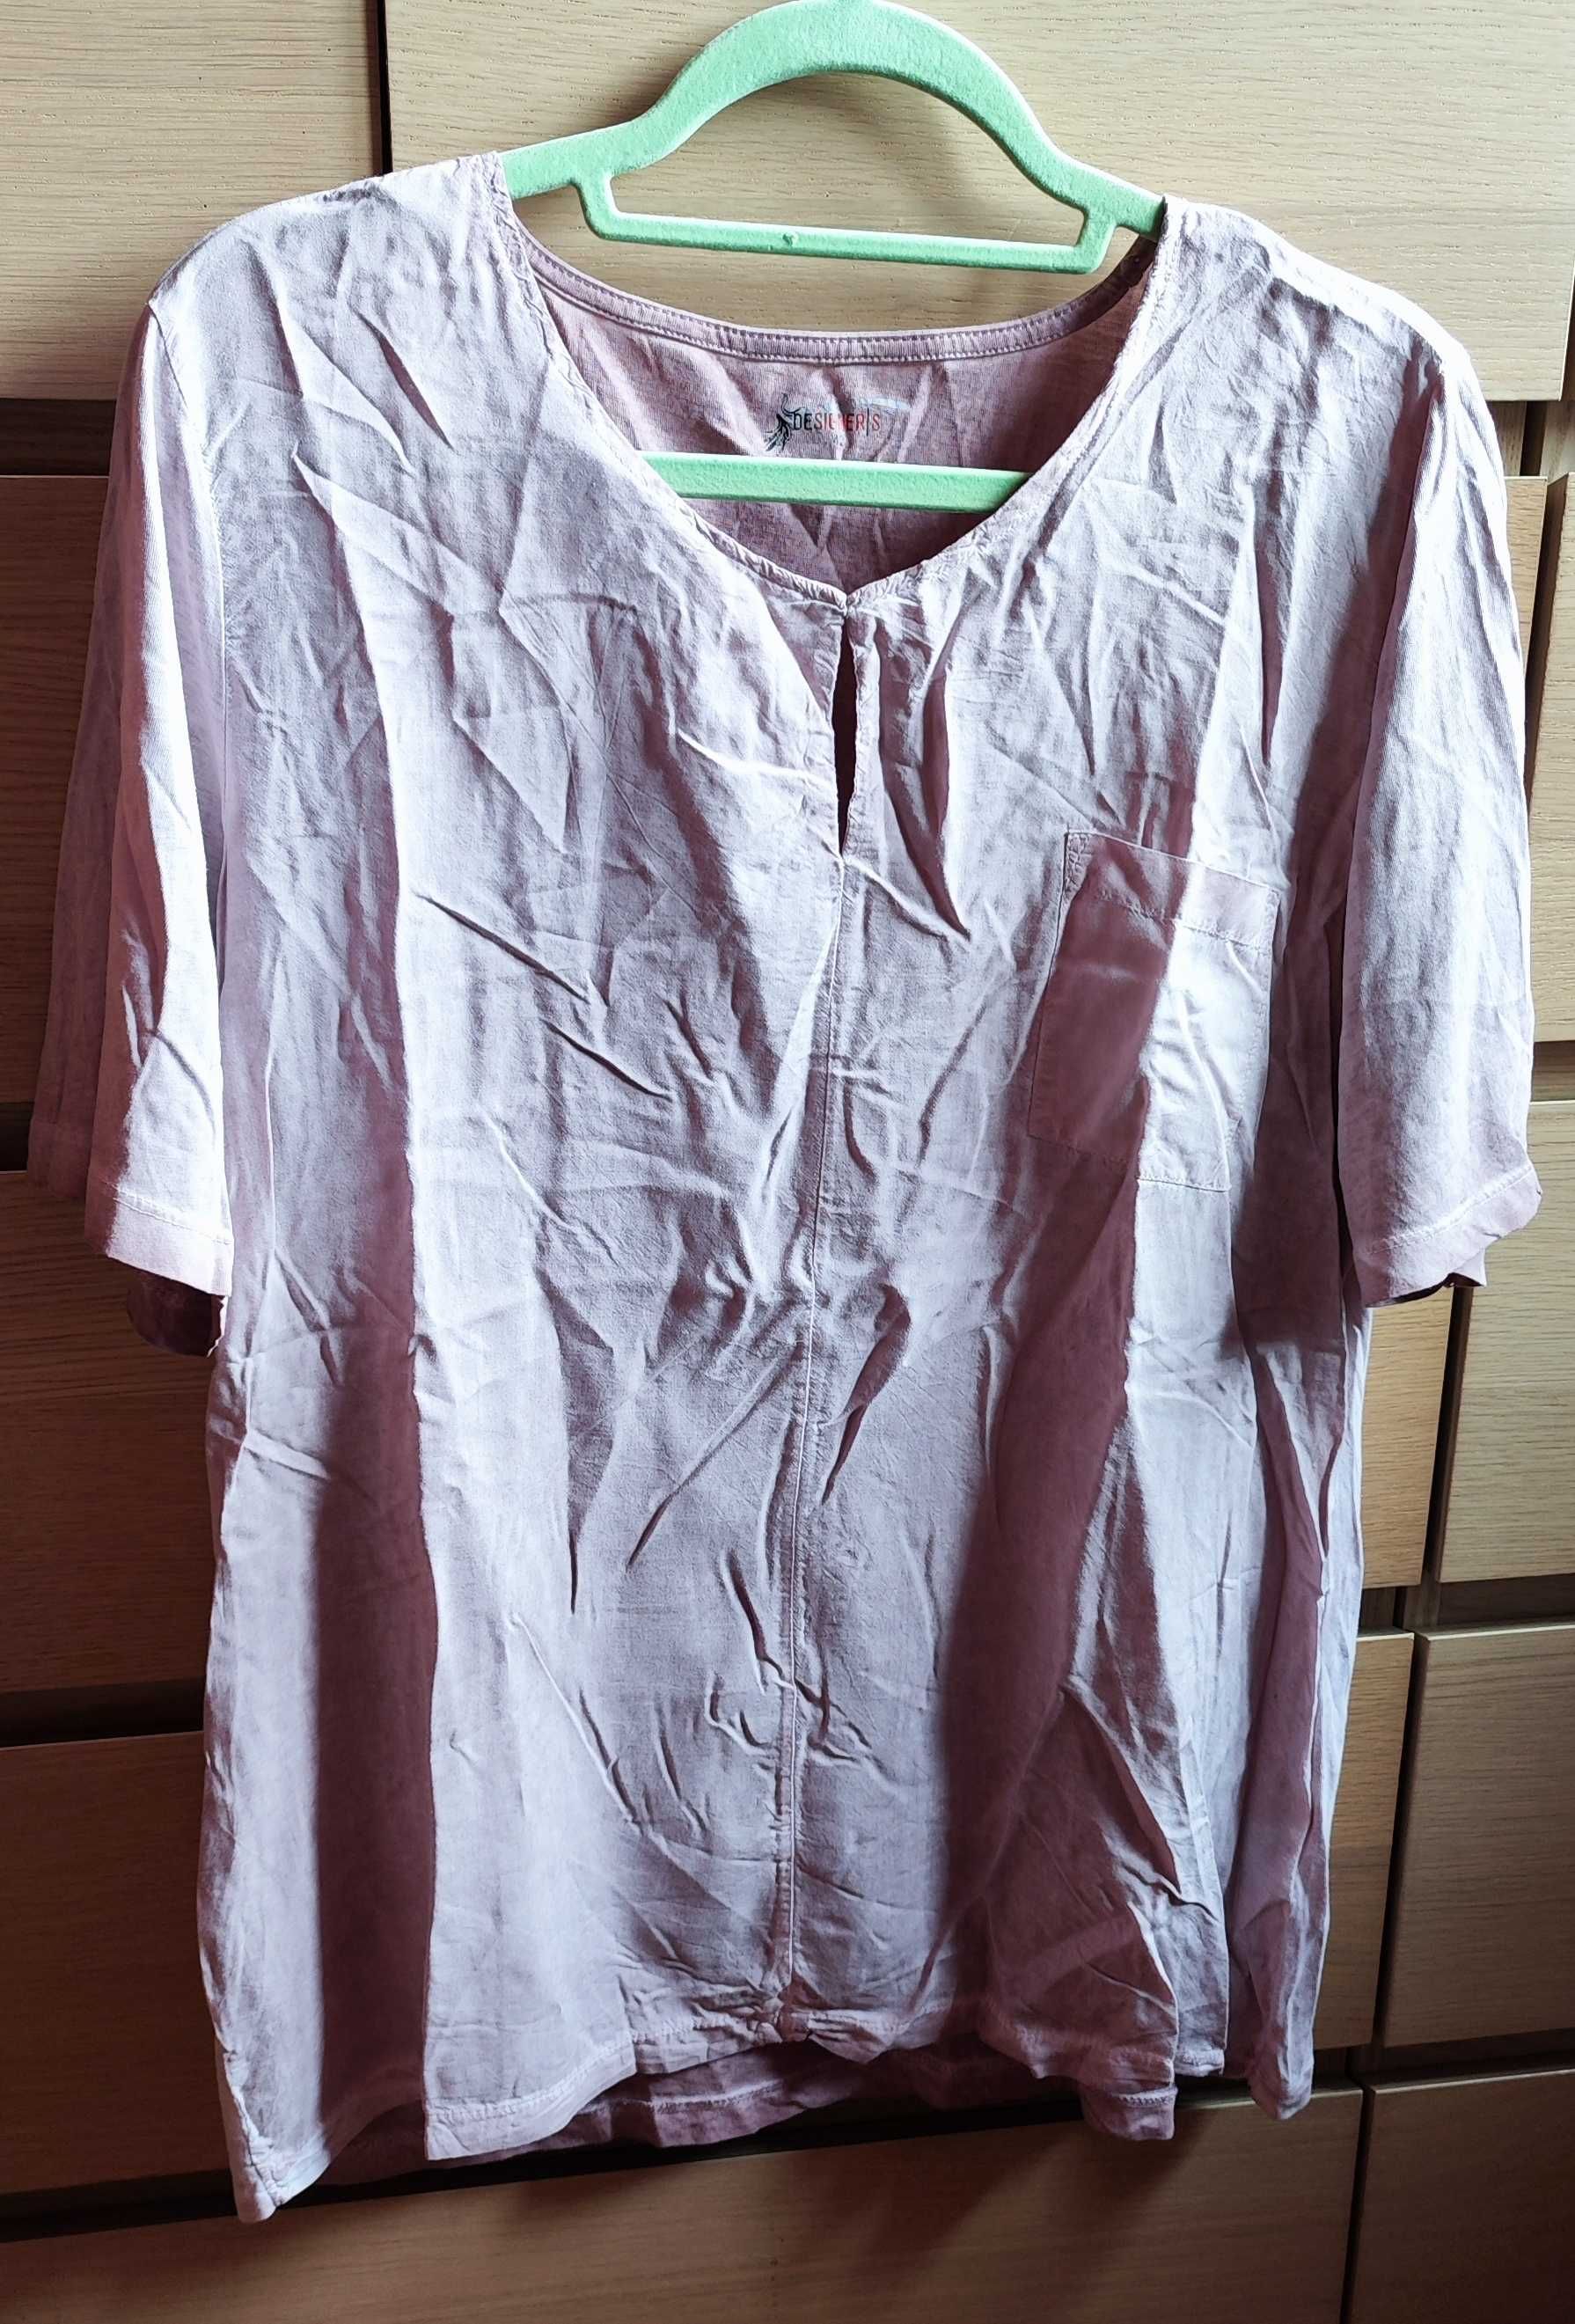 Designers pudrowa różowa bluzka tshirt 42/XL